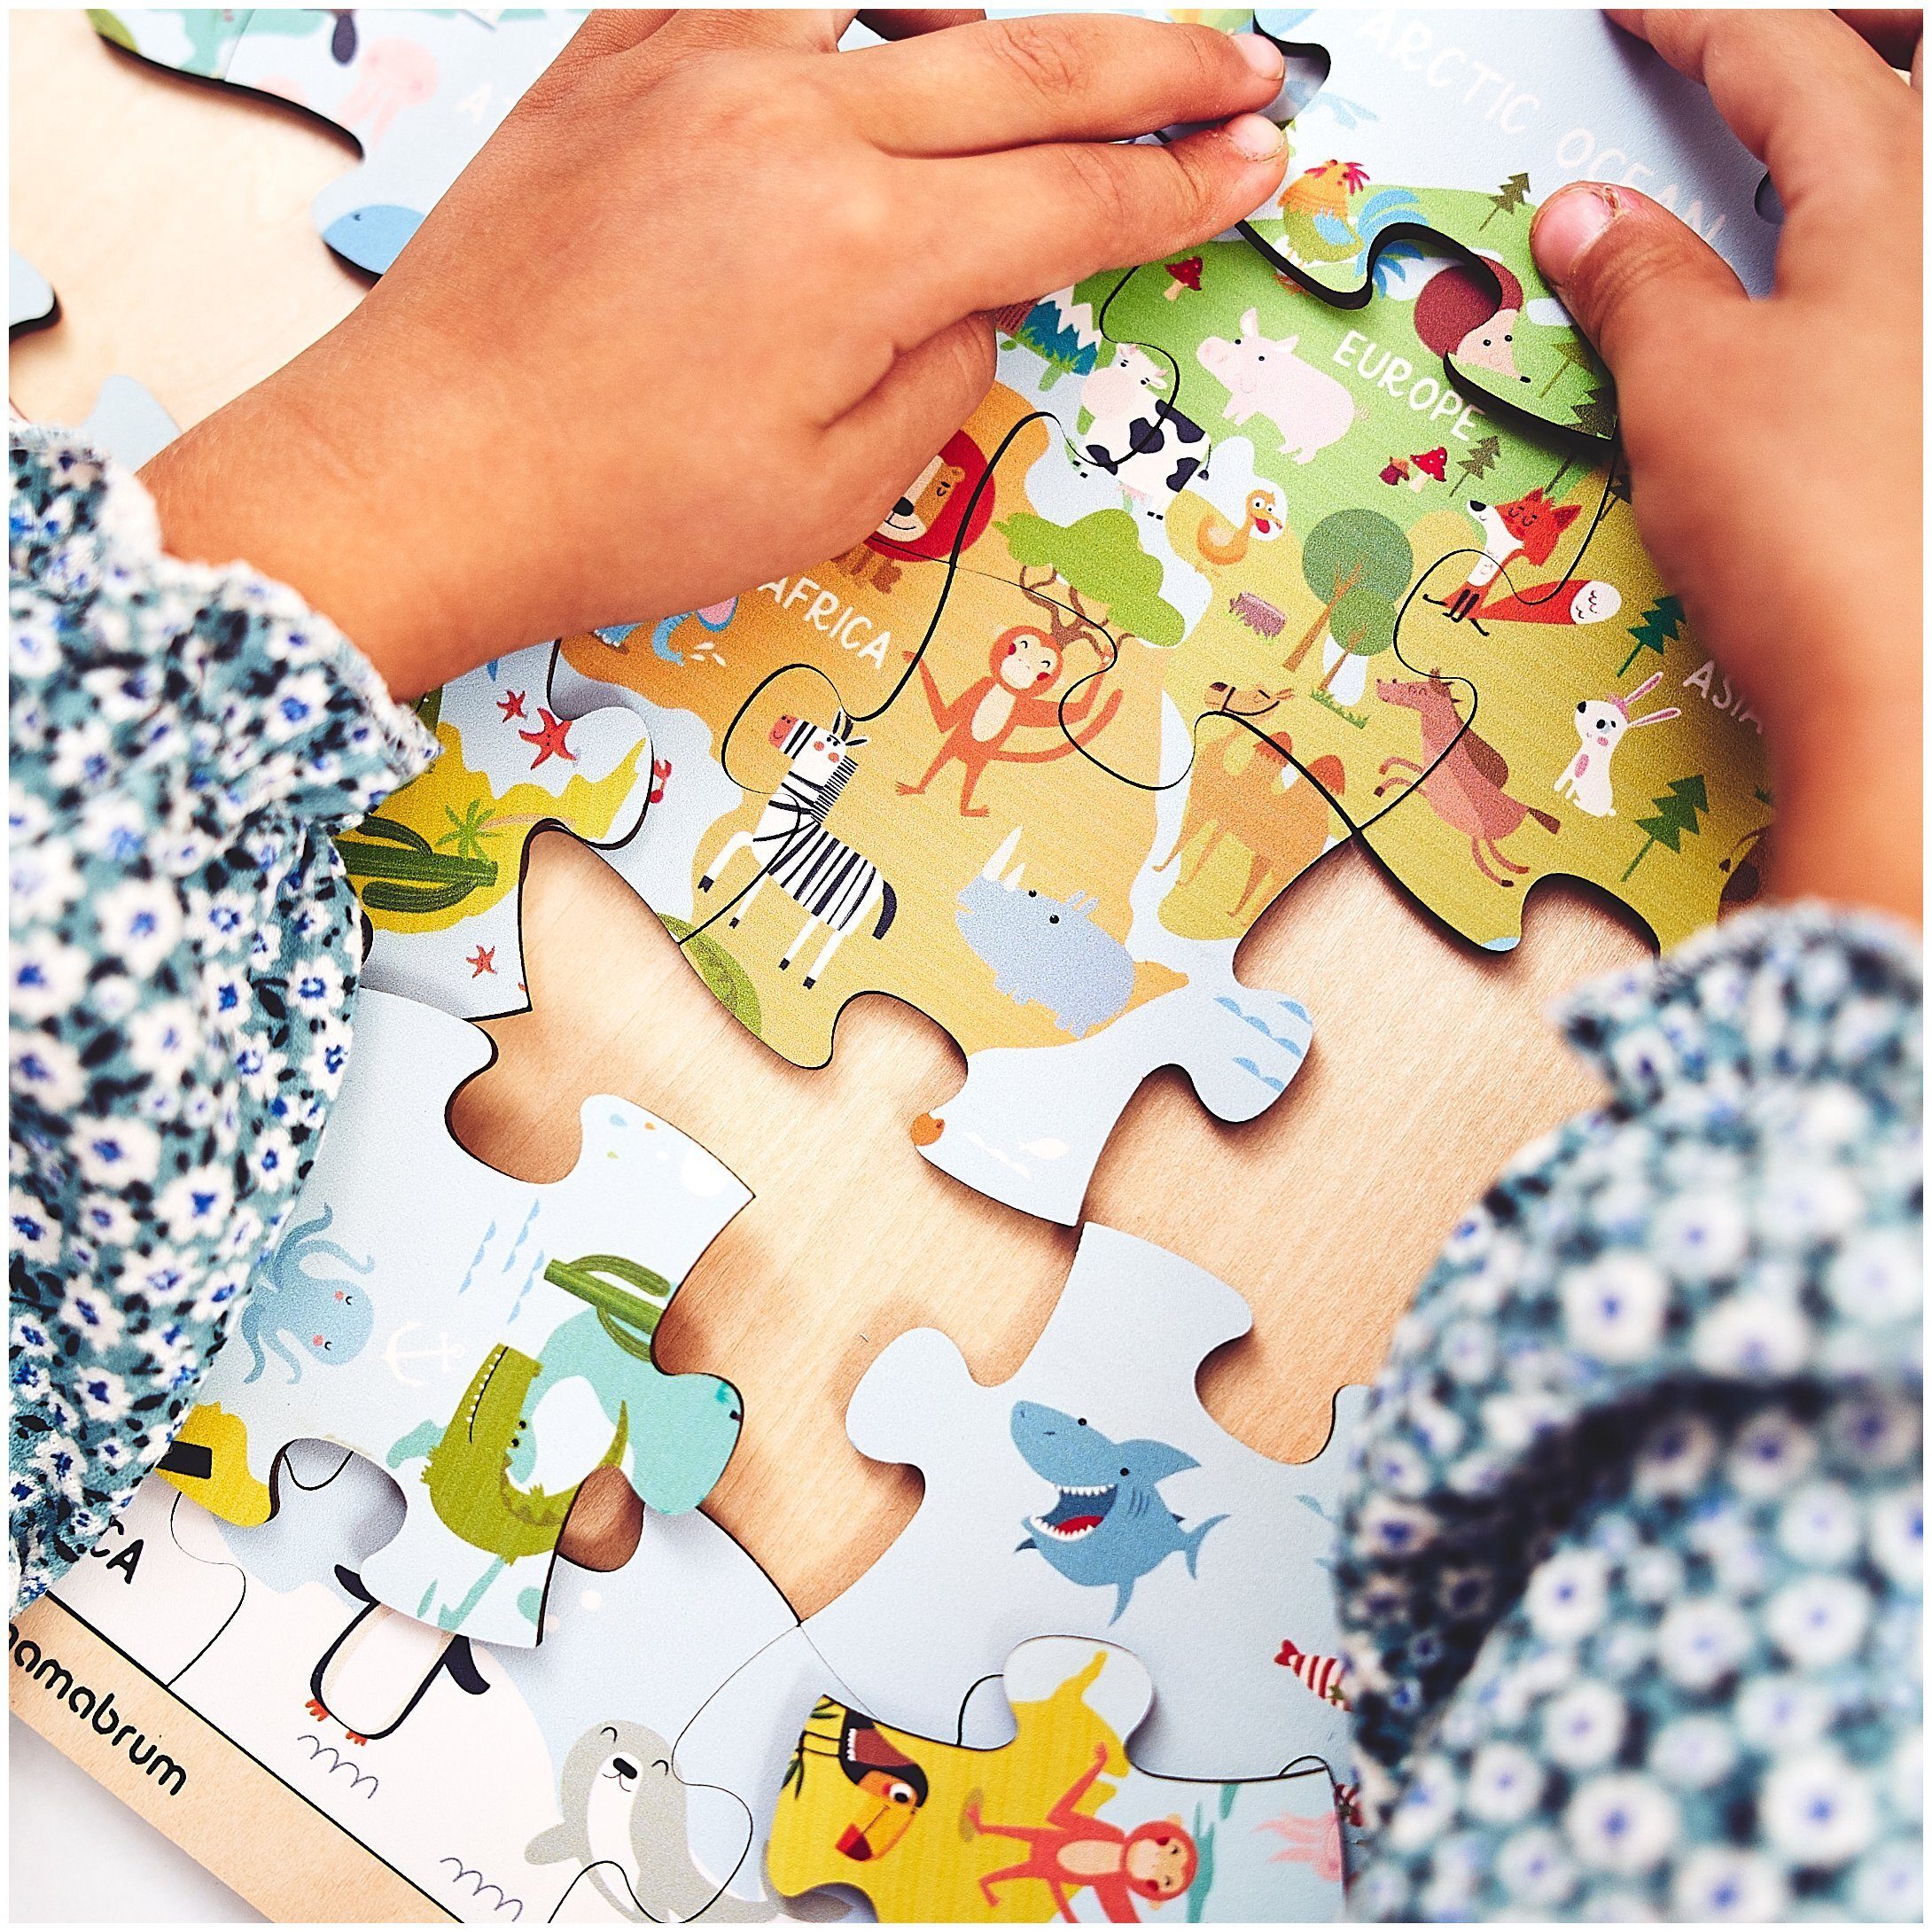 - Mamabrum Welt Puzzle-Sortierschale Karte Holzpuzzle der